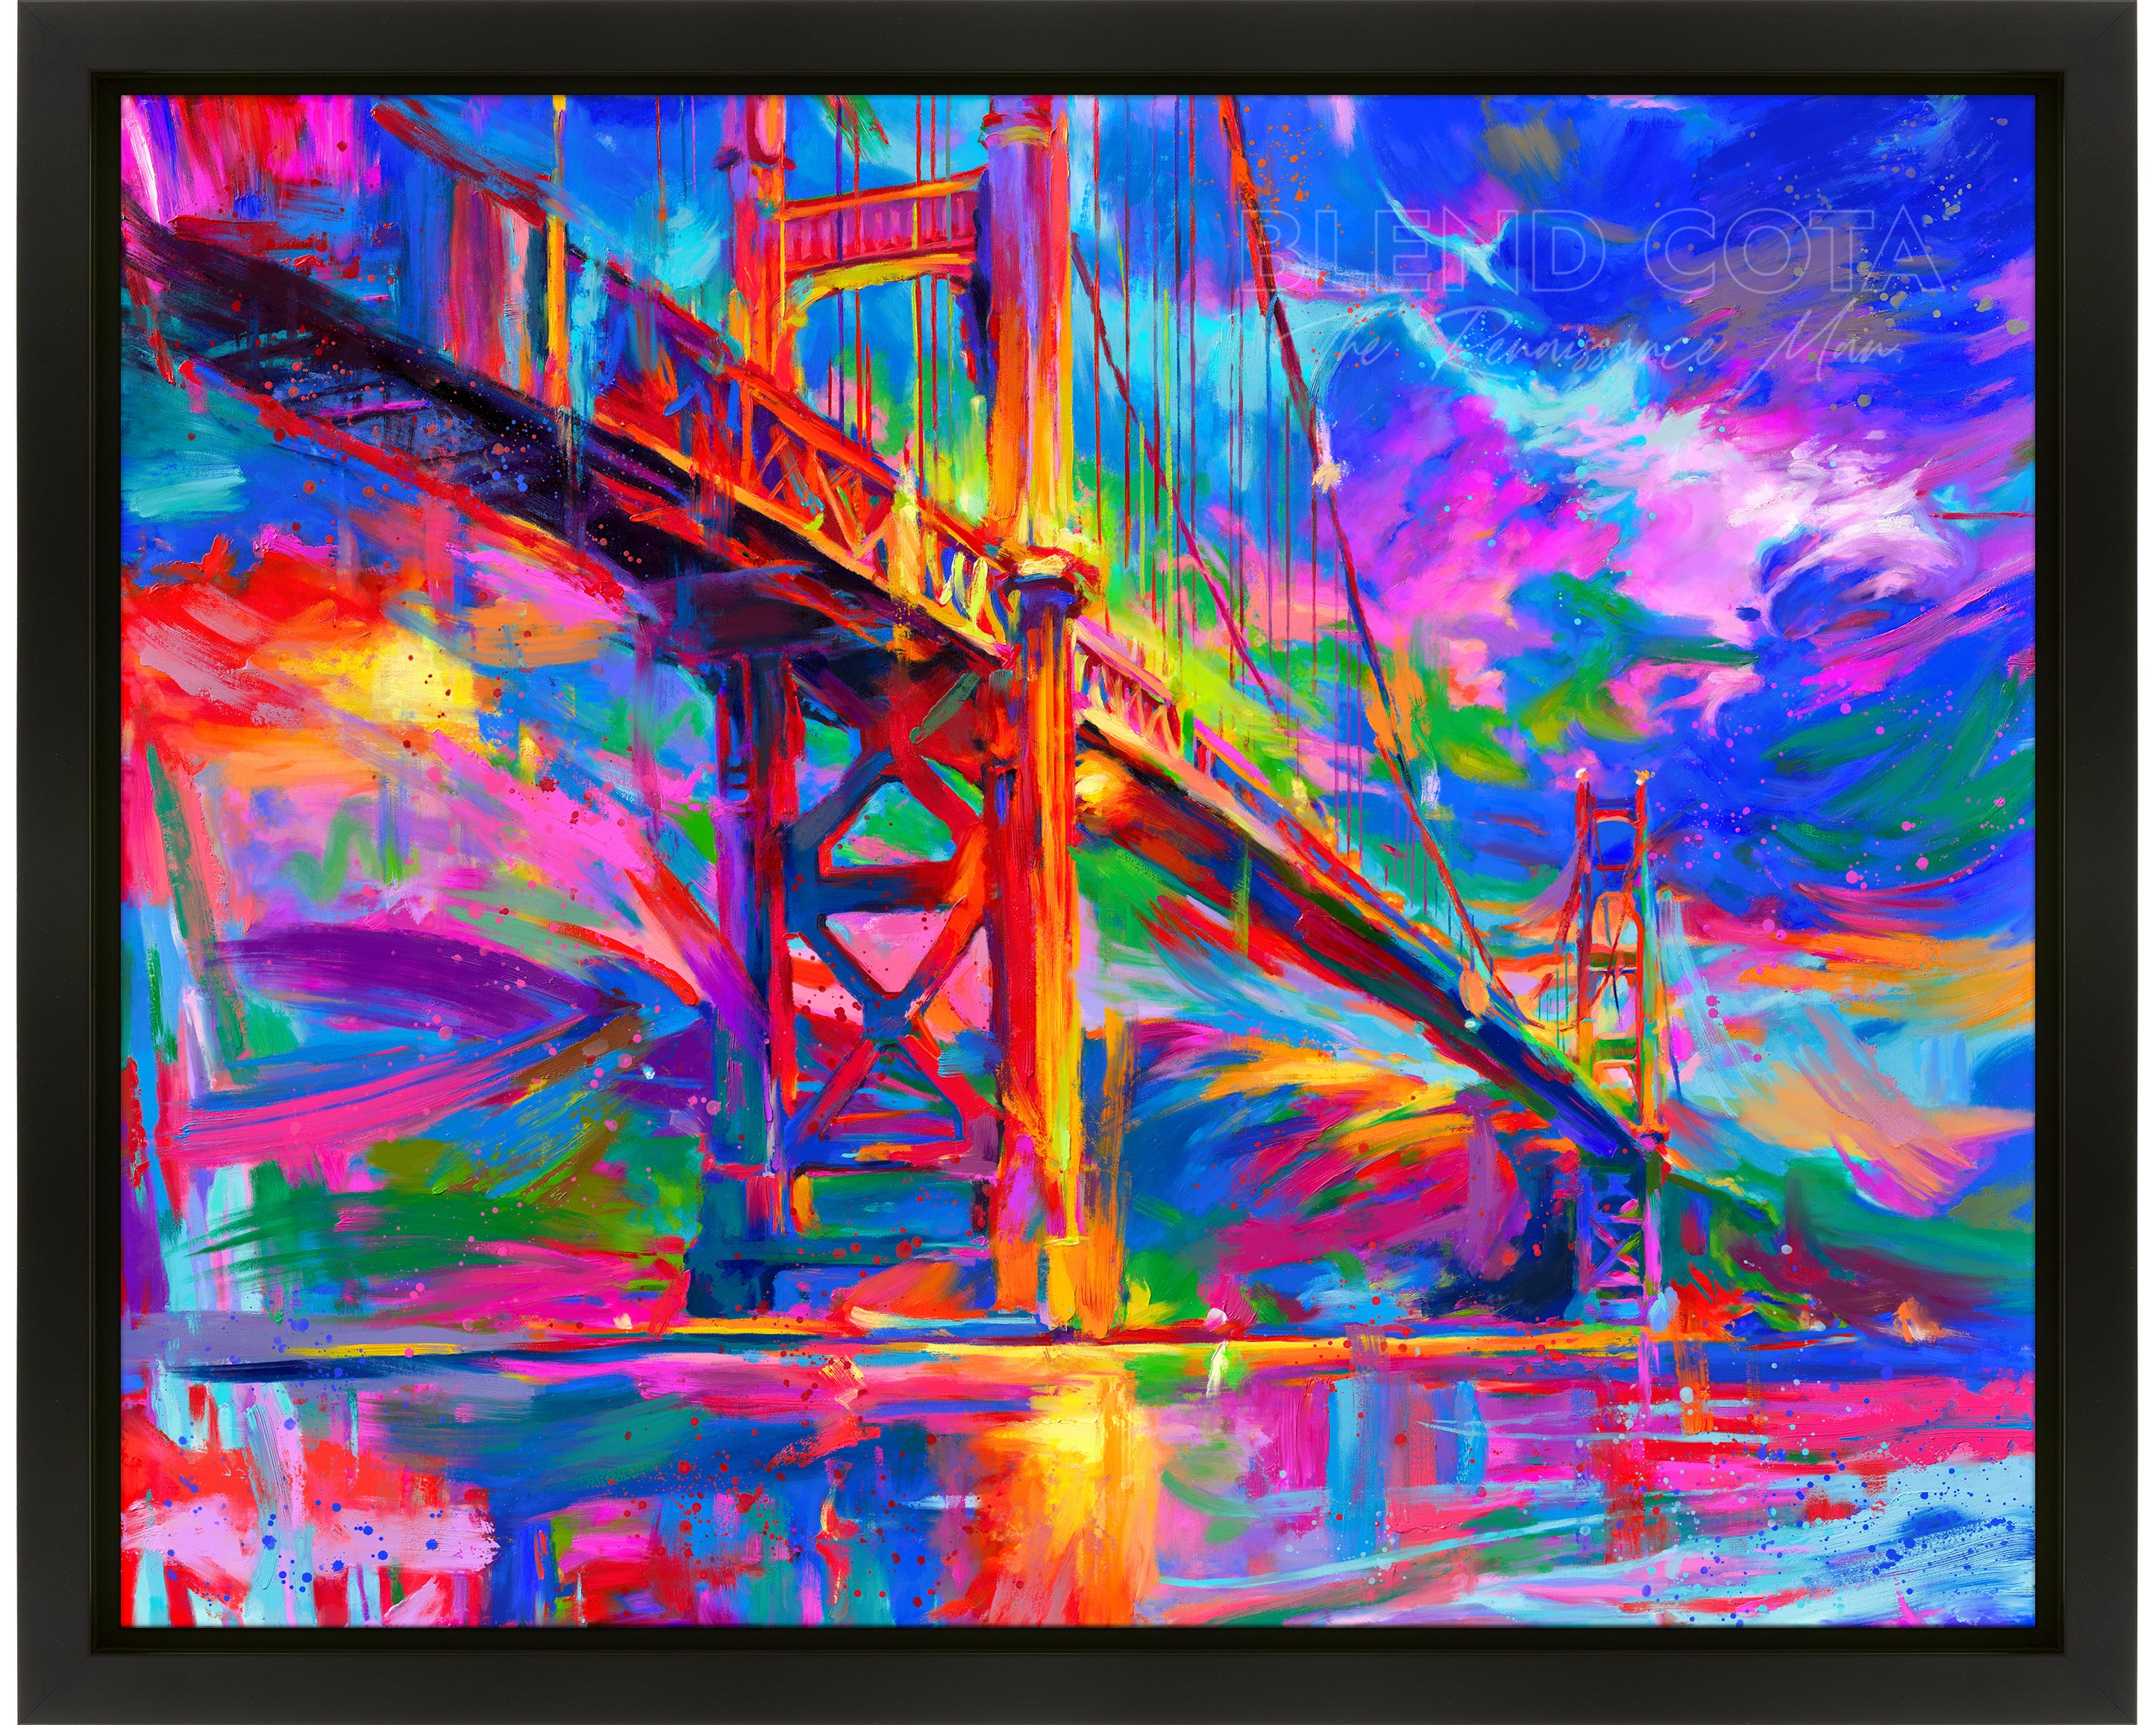 Golden Gate Bridge an Original Oil Painting from Blend Cota Studios in Black Frame